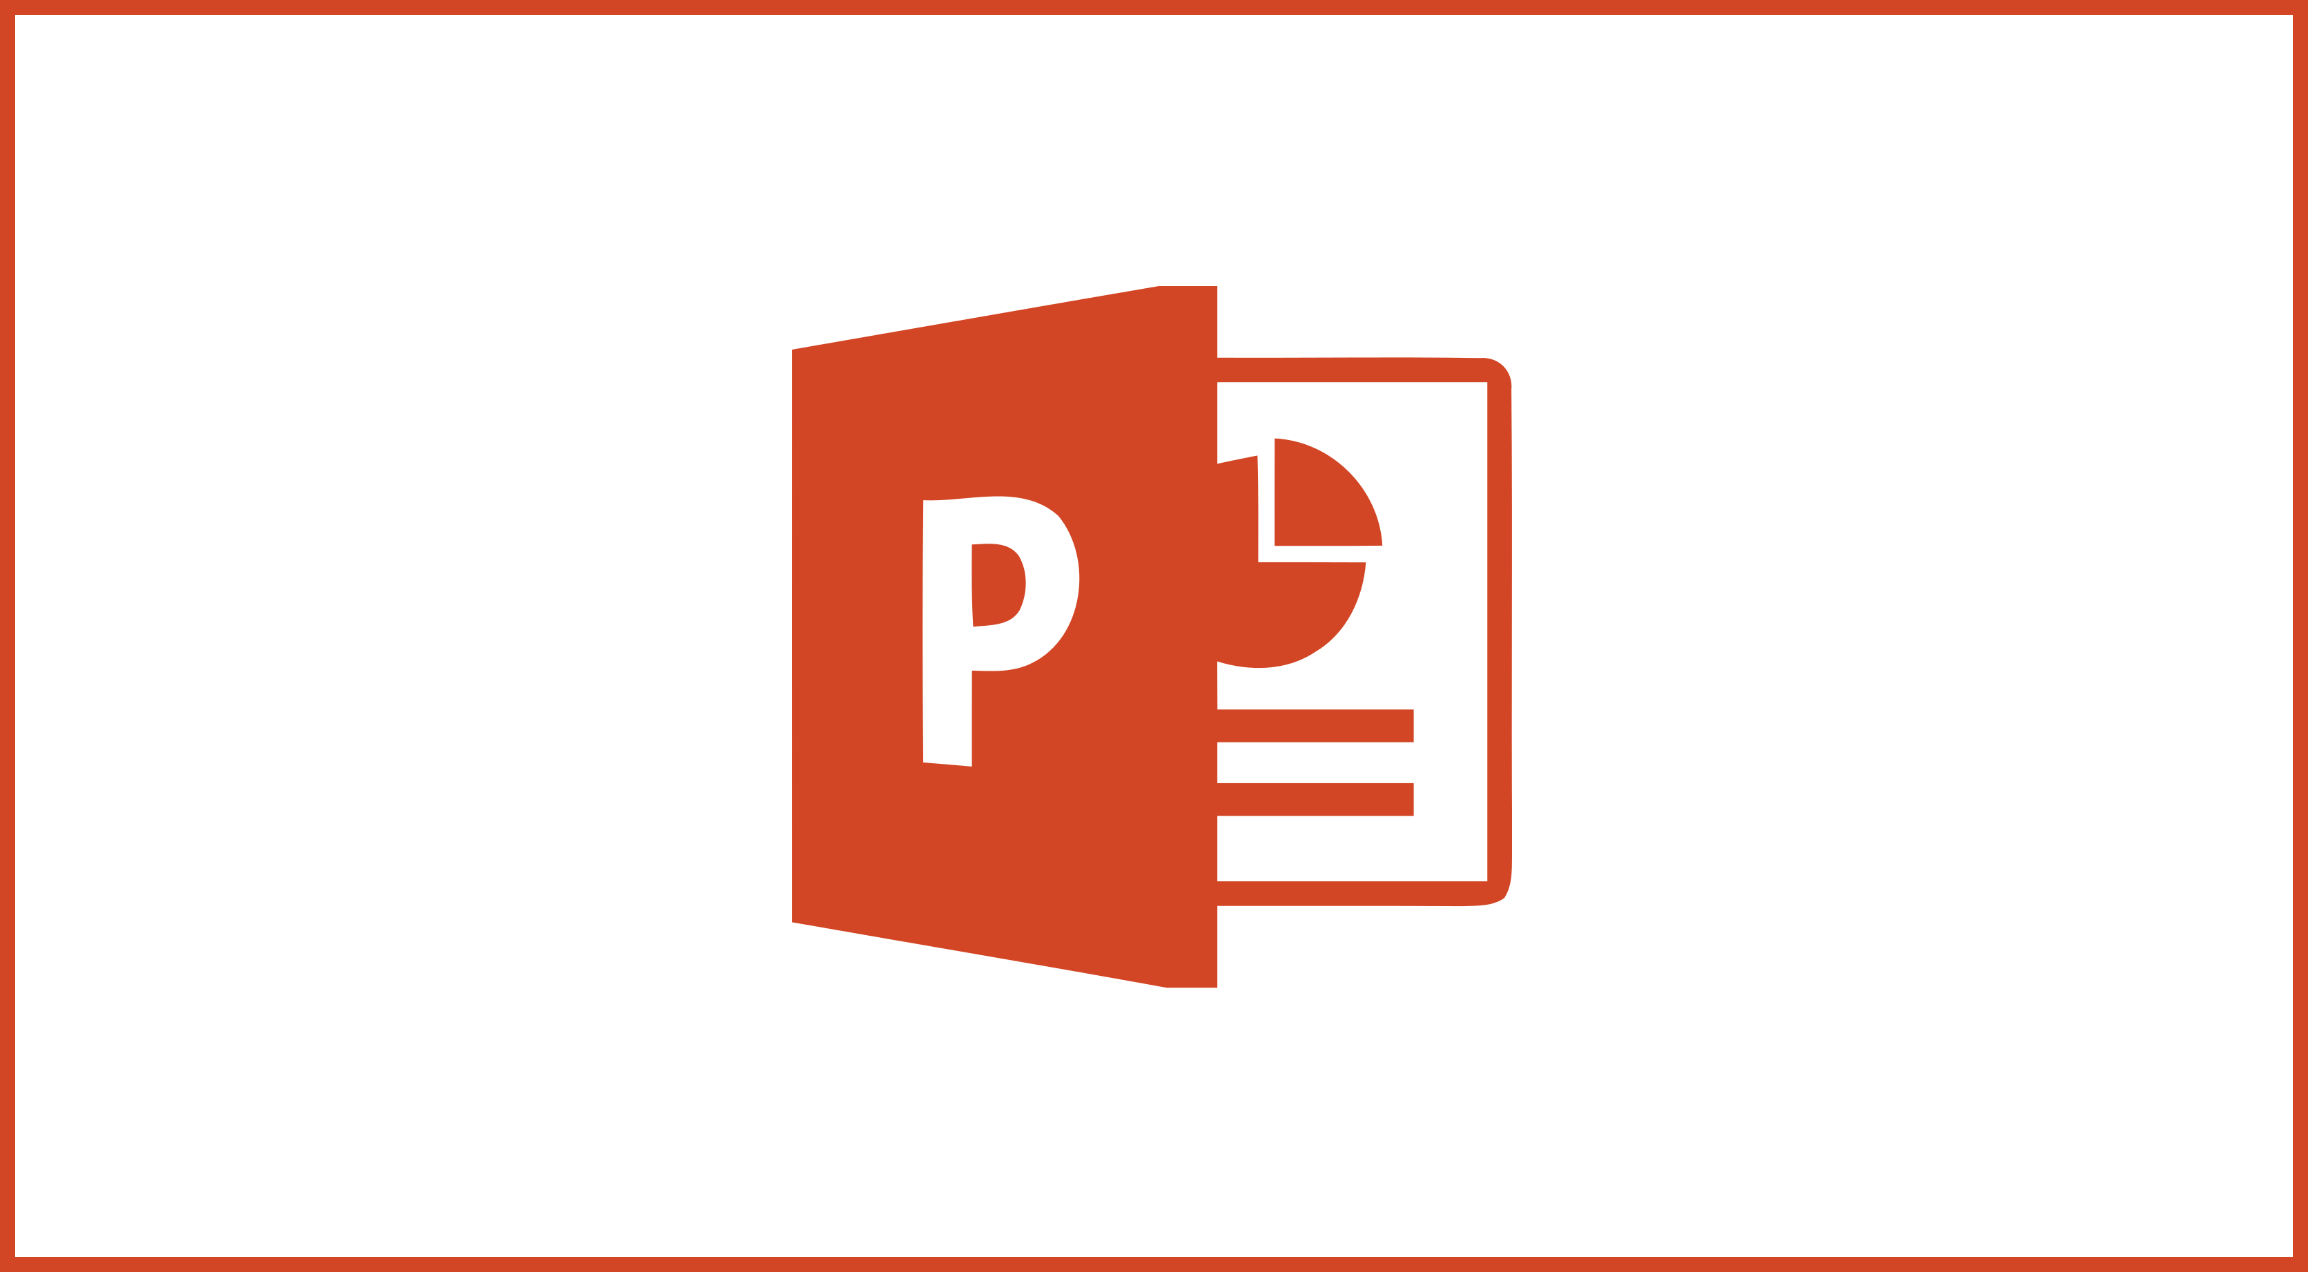 Power поинт. POWERPOINT. Microsoft POWERPOINT. Логотип Пауэр поинт. Microsoft POWERPOINT картинки.